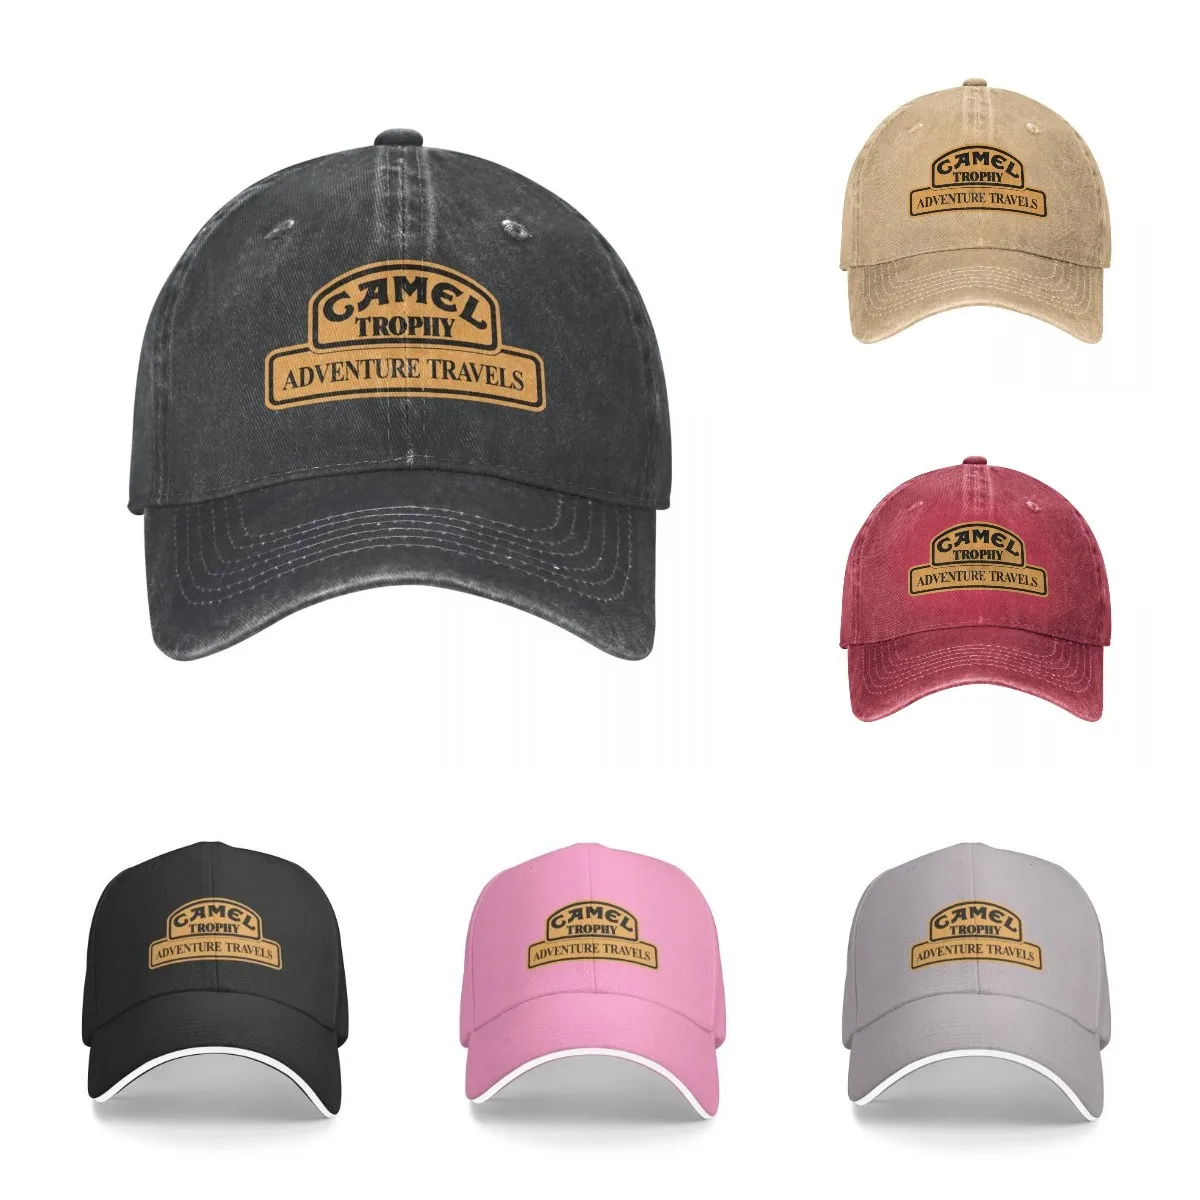 Dad Camel Trophy Racing Baseball Cap Vintage Hat Outdoor Travel Washed Denim Cap Hats Designer Cap Men Snapback